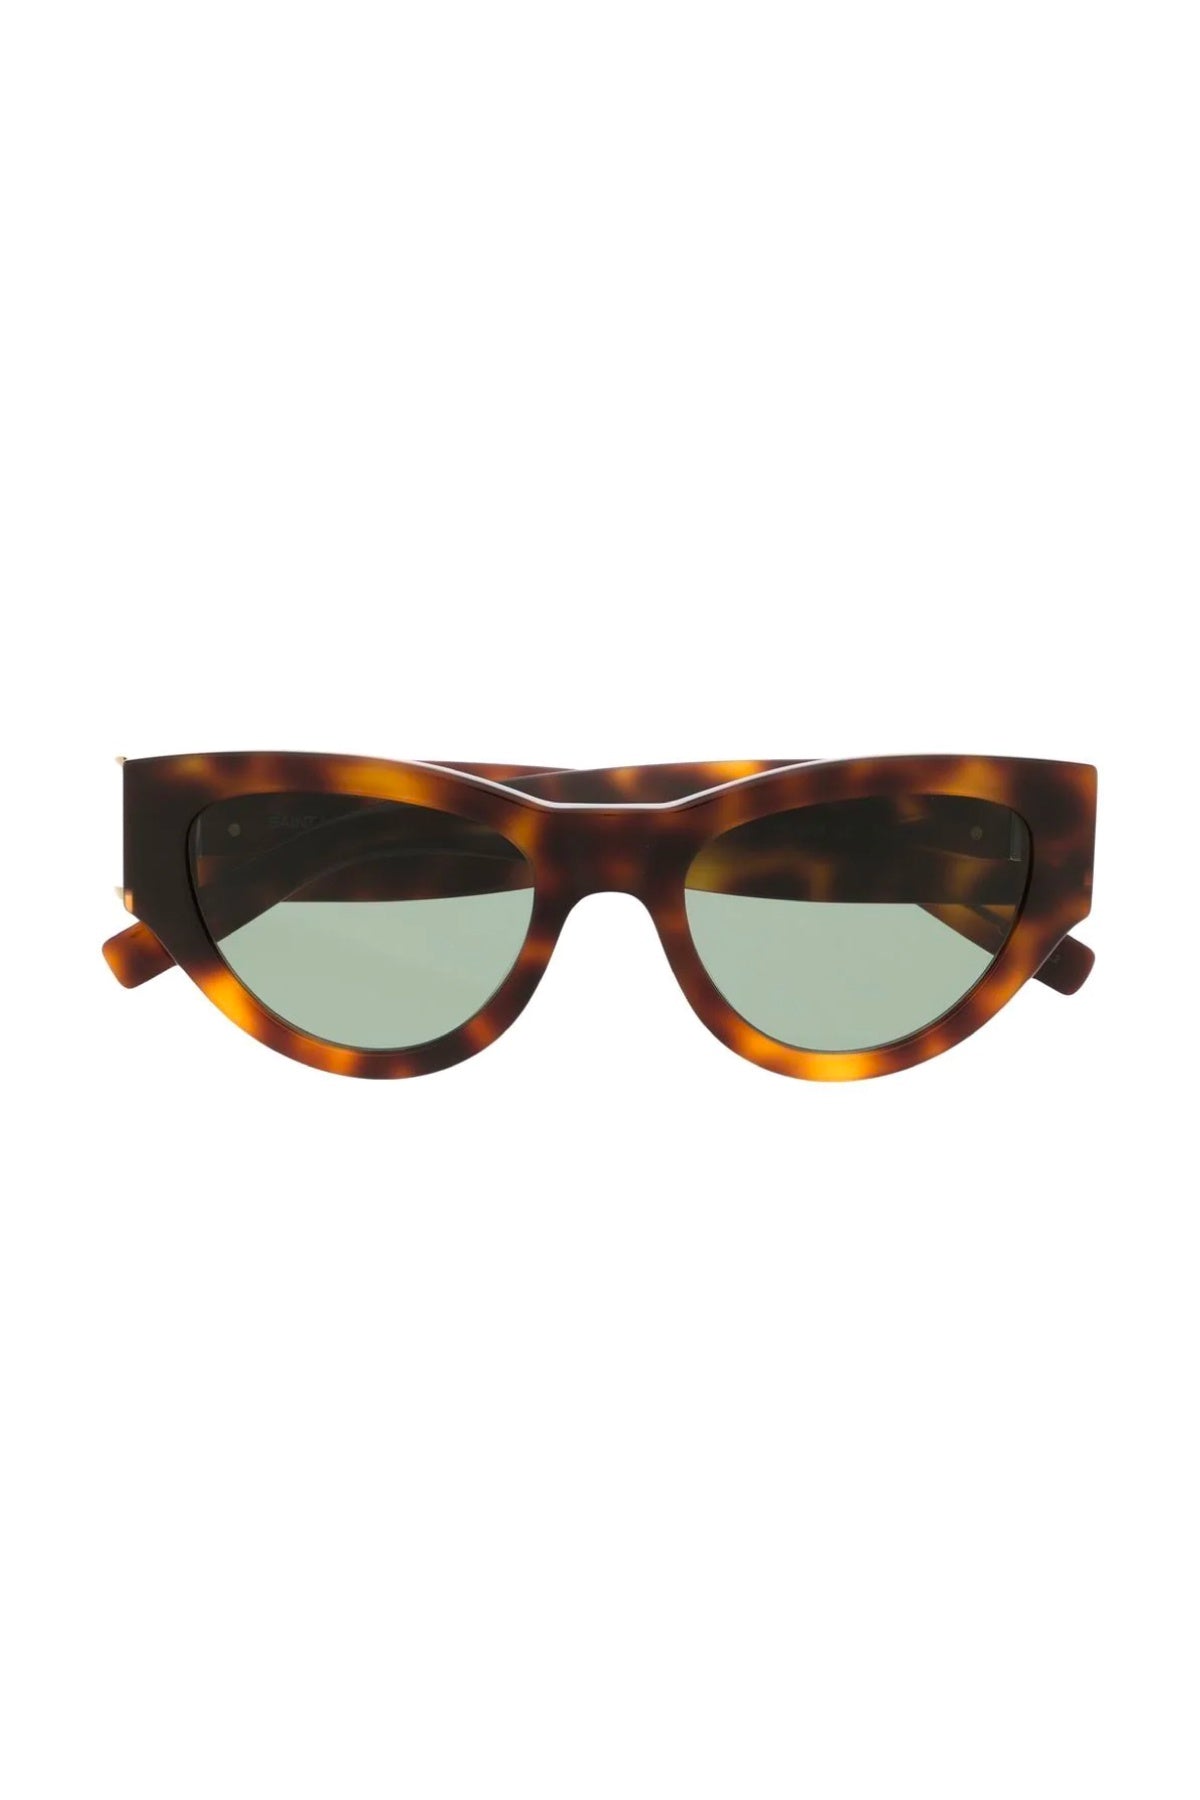 Saint Laurent YSL Cat Eye Sunglasses - Havana